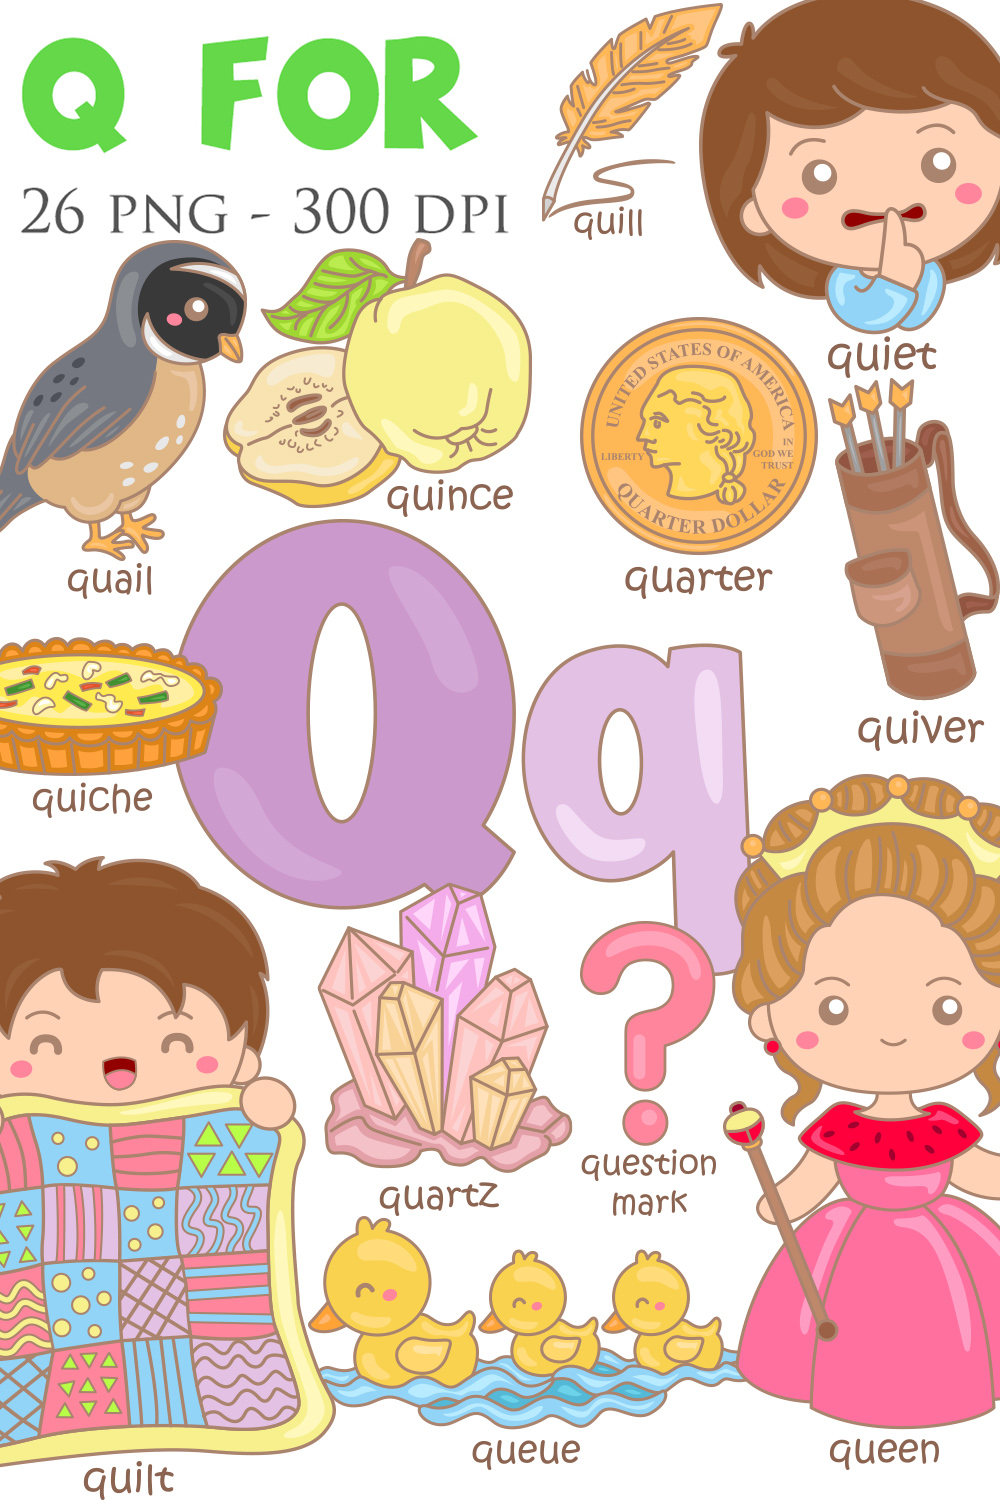 Alphabet Q For Vocabulary School Lesson Queen Quail Quit Queque Quartz Quit Quinche Quill Quarter Question MarkIllustration Vector Clipart Cartoon pinterest preview image.